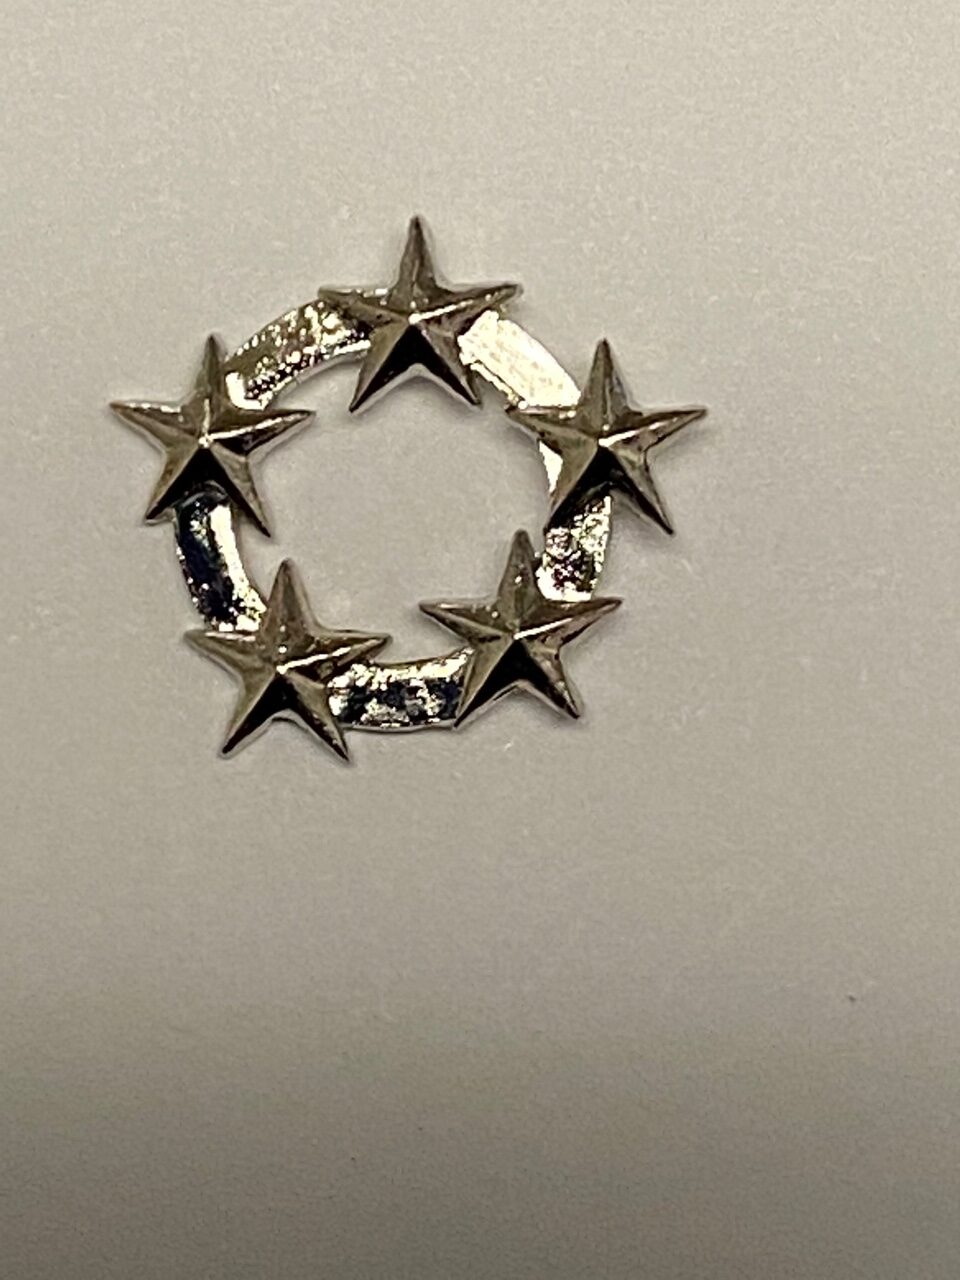 FIVE STAR WREATH - ER Badge